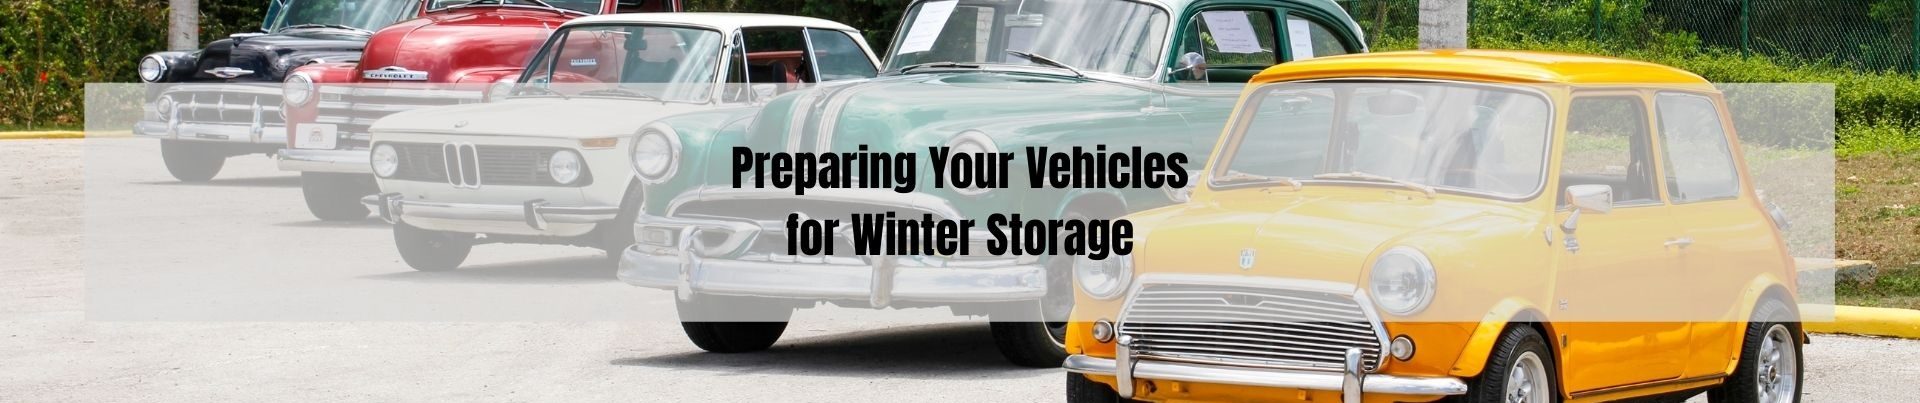 Winter Vehicle Storage